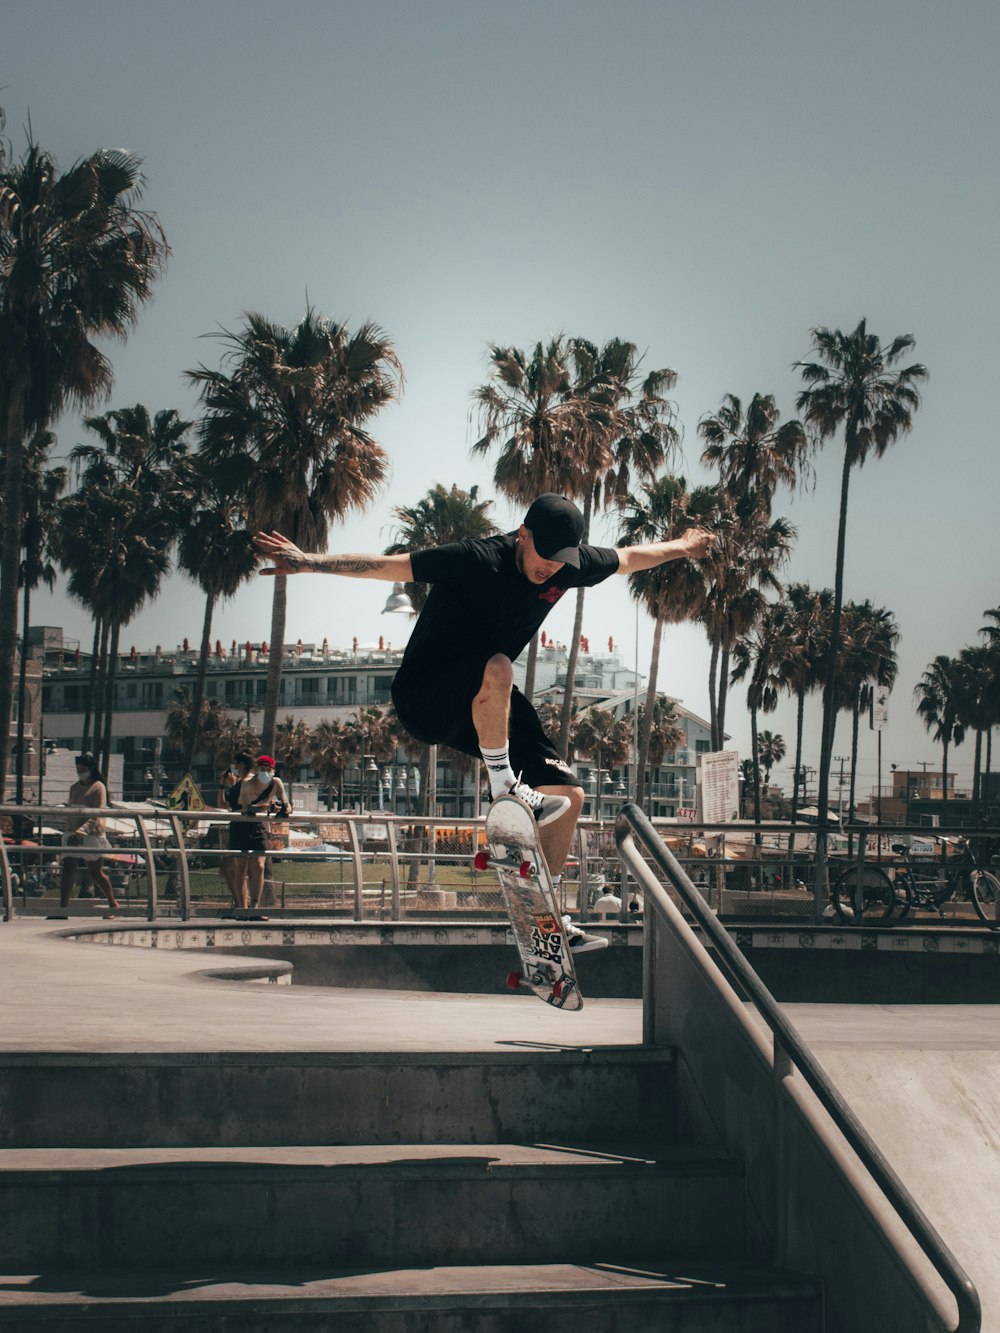 man in black shirt and black pants riding skateboard during daytime